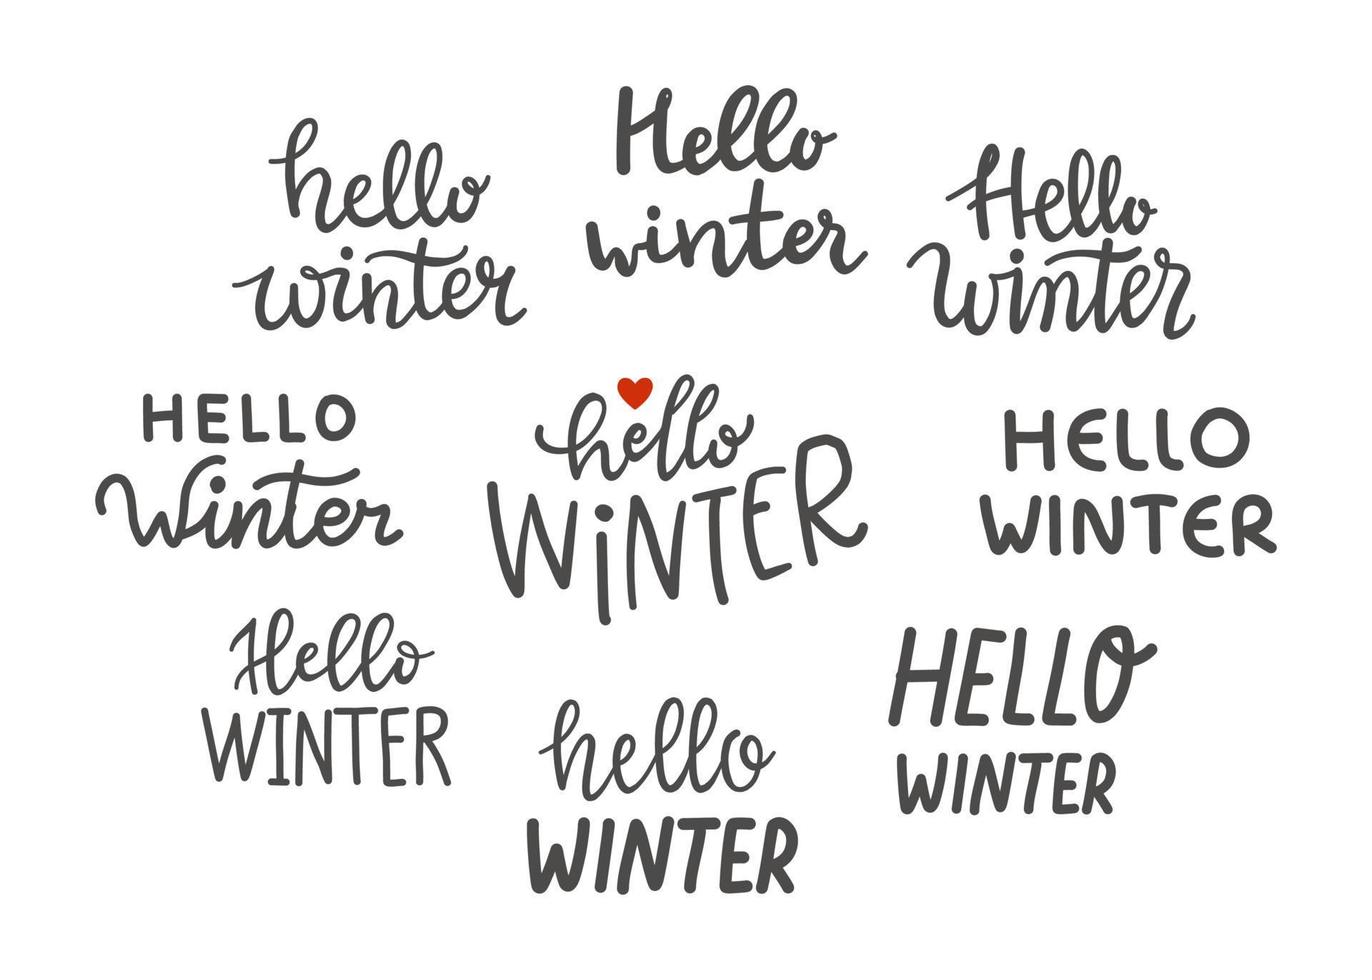 Hello winter lettering set isolated on white vector illustration